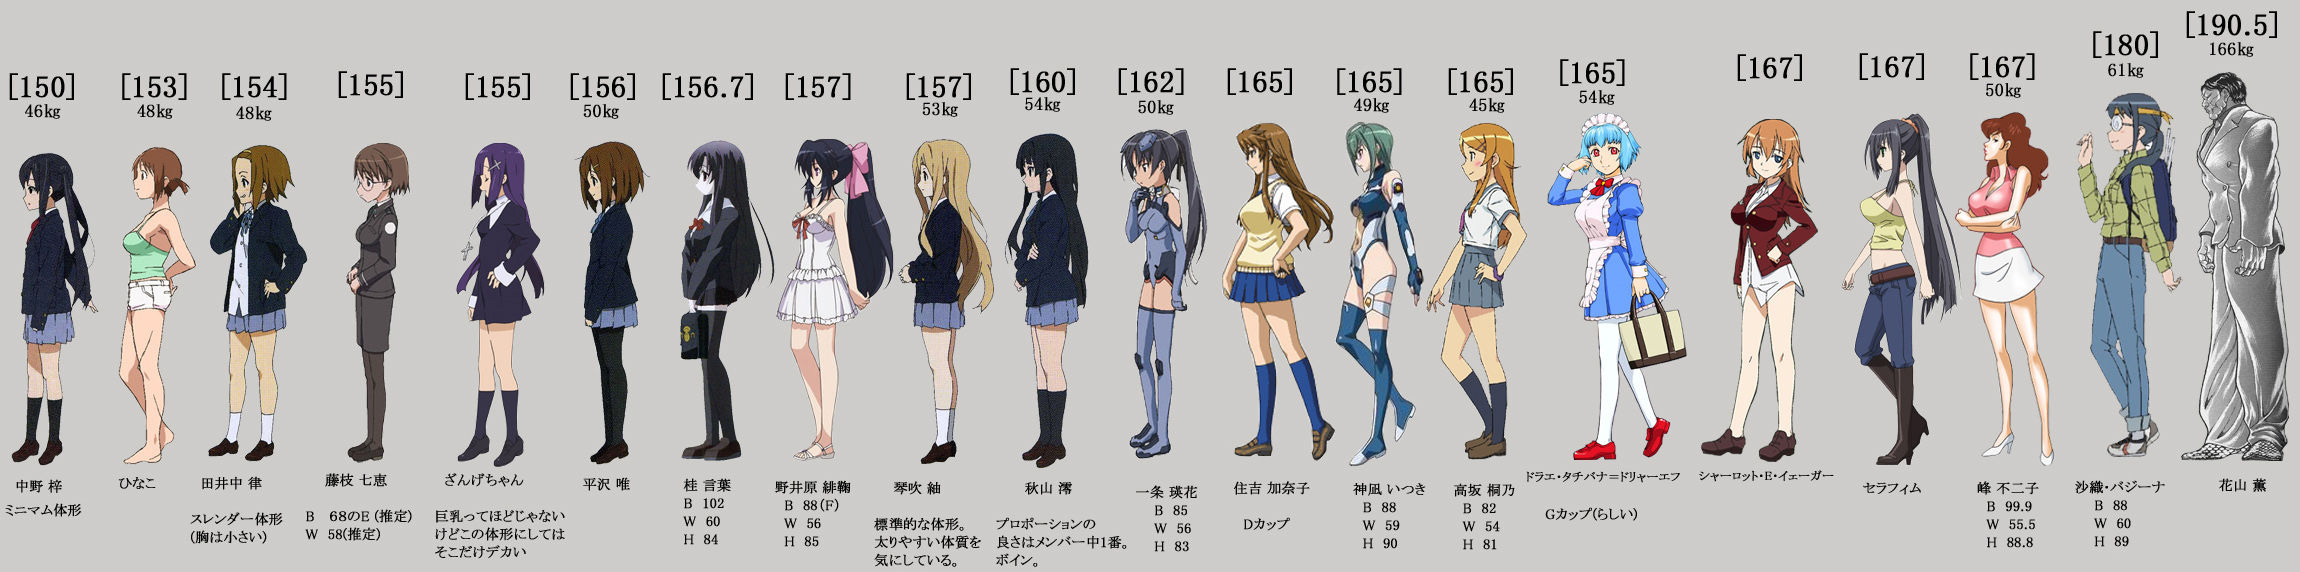 Update more than 59 4 11 anime characters best - highschoolcanada.edu.vn